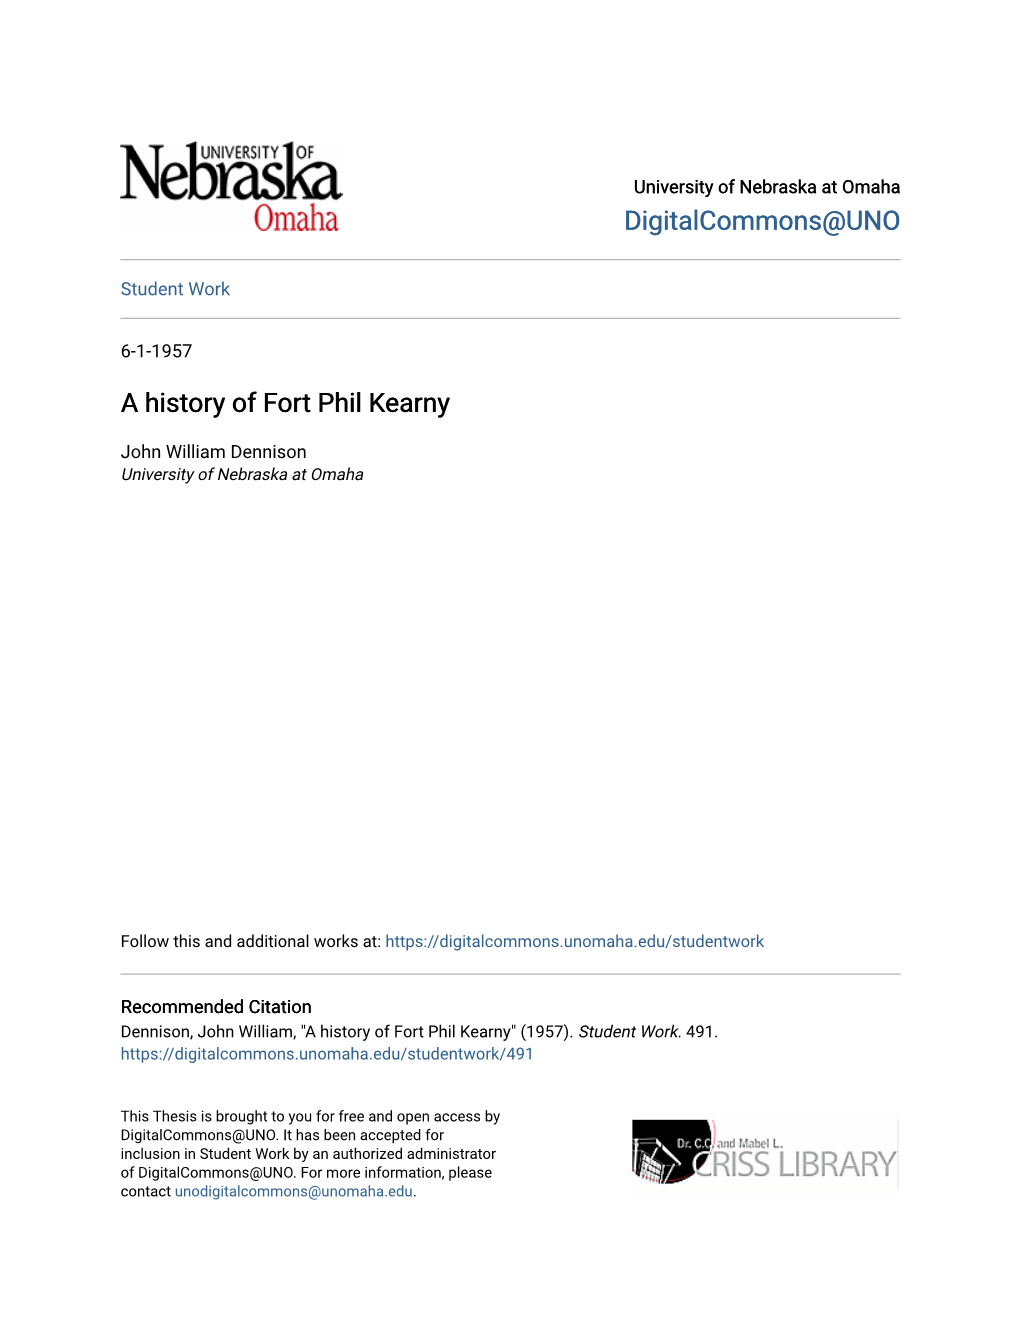 A History of Fort Phil Kearny